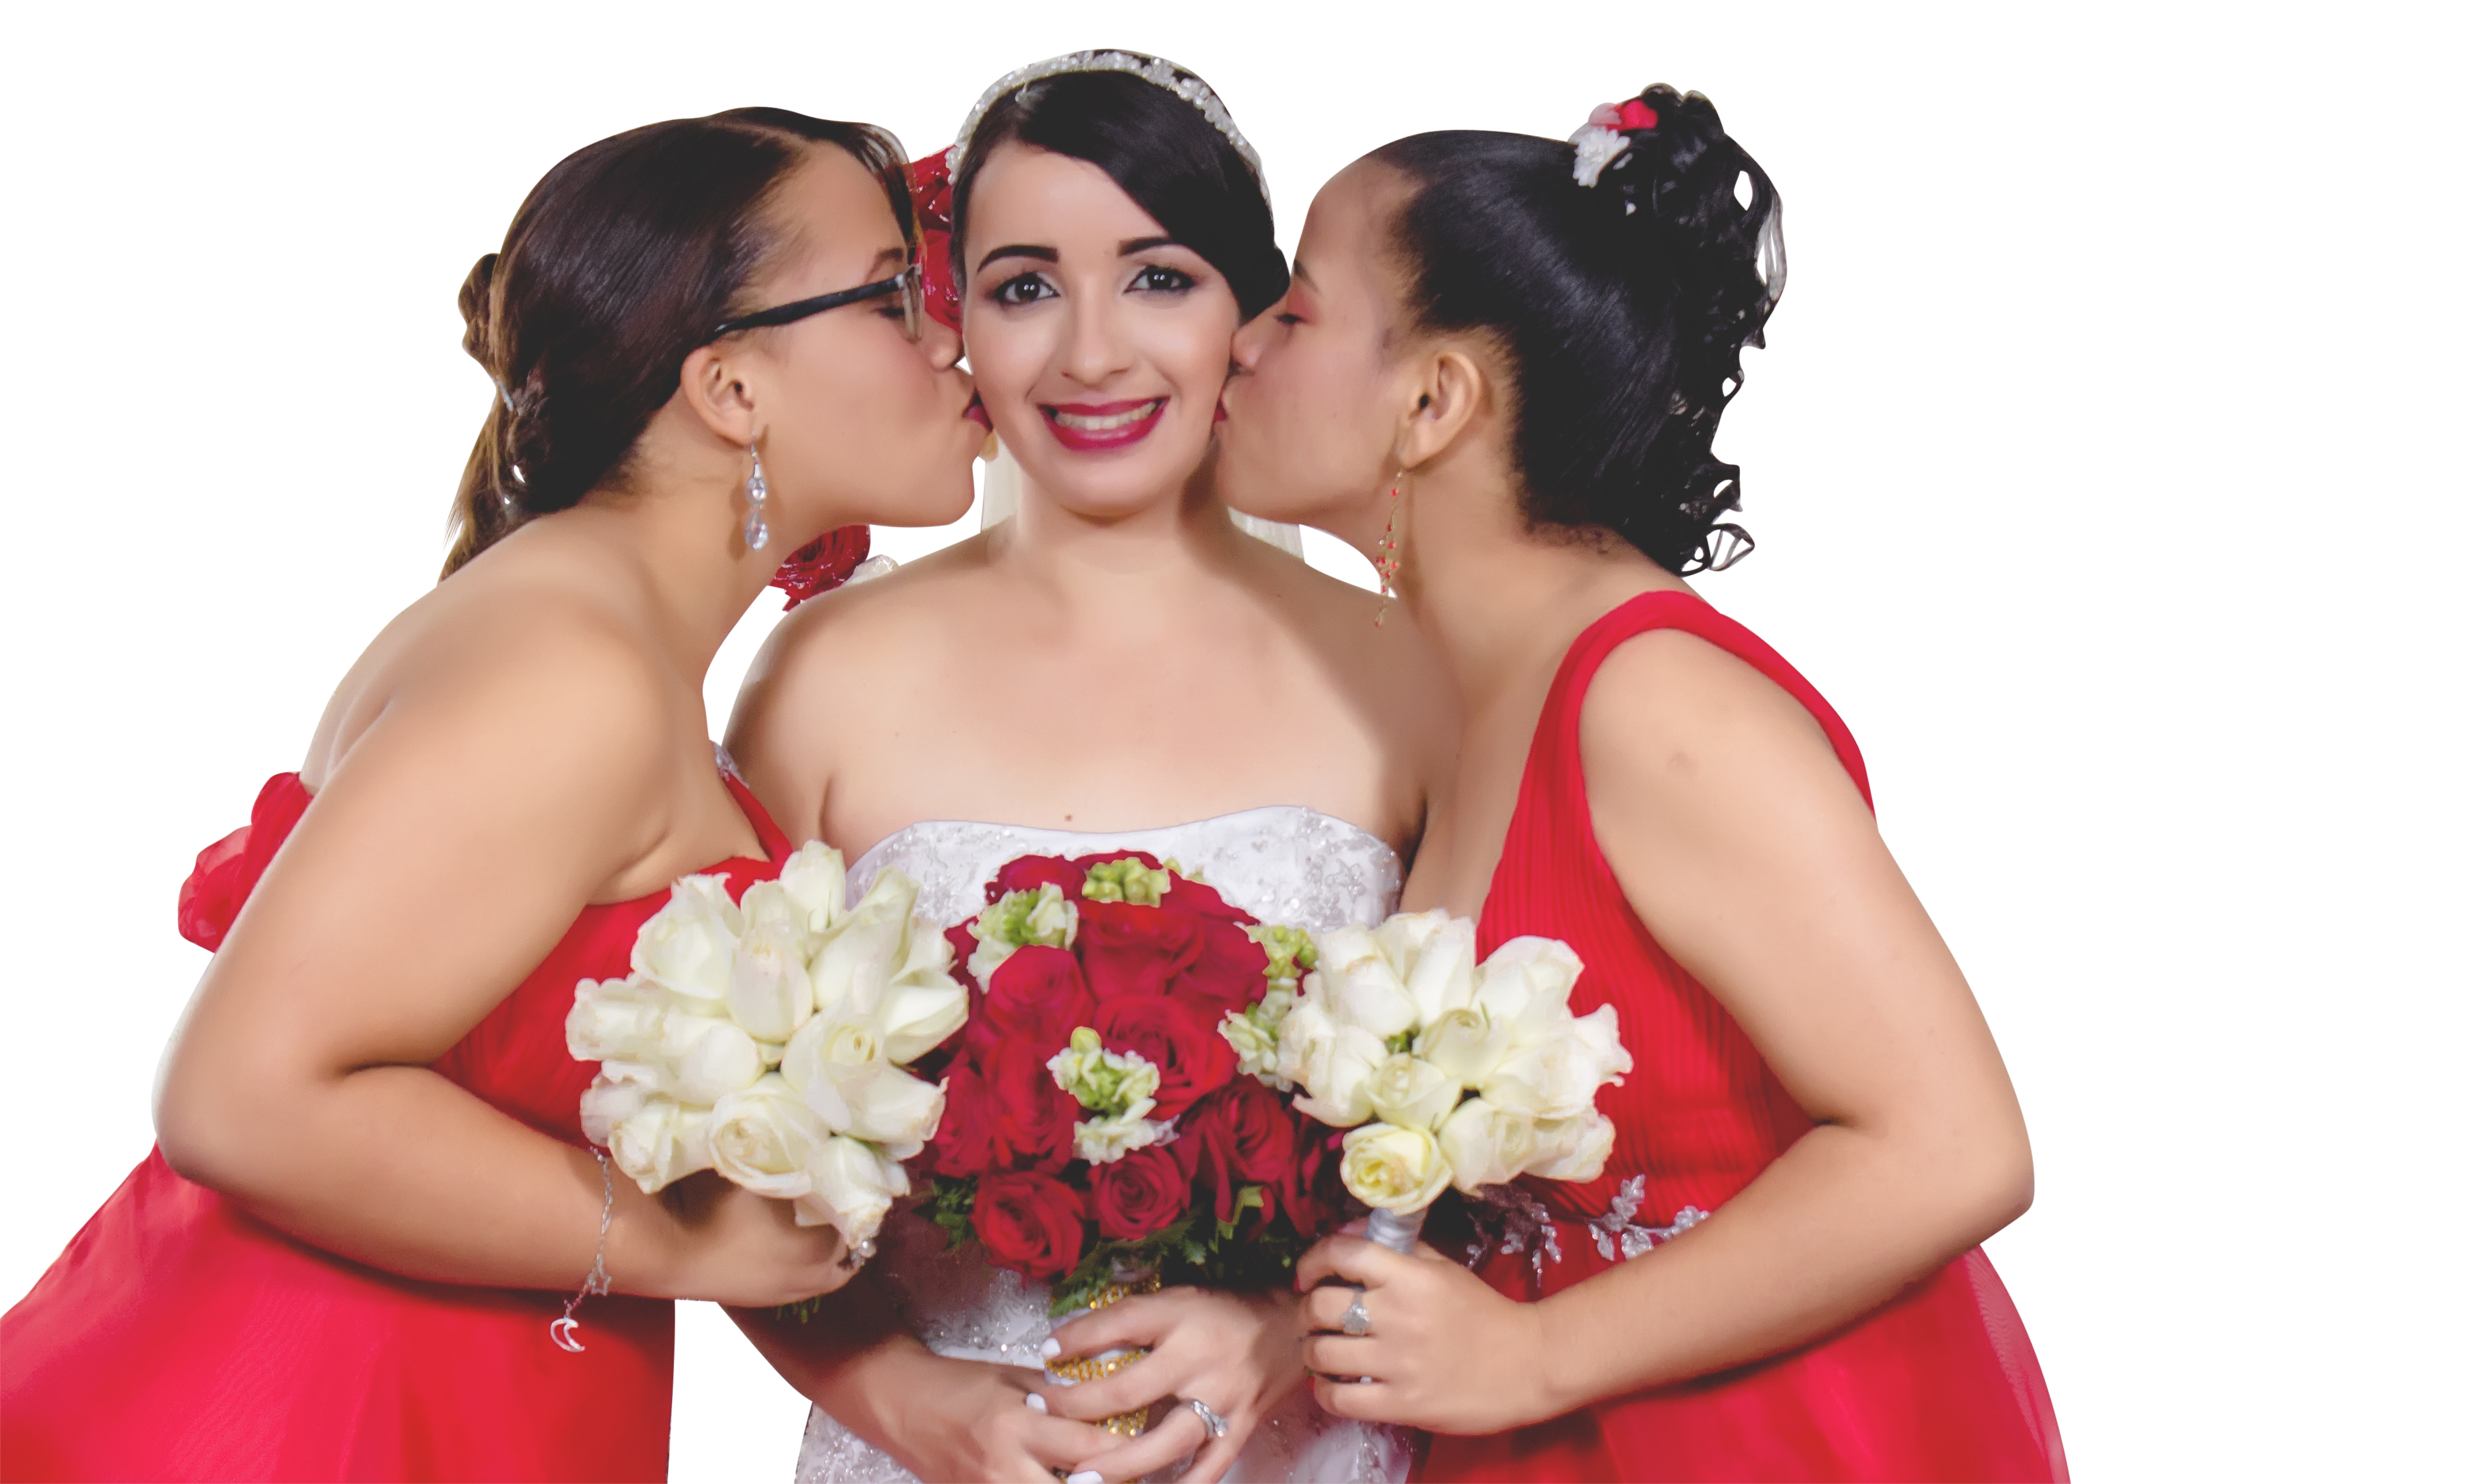 A Group Of Women Kissing A Bridesmaid's Cheek